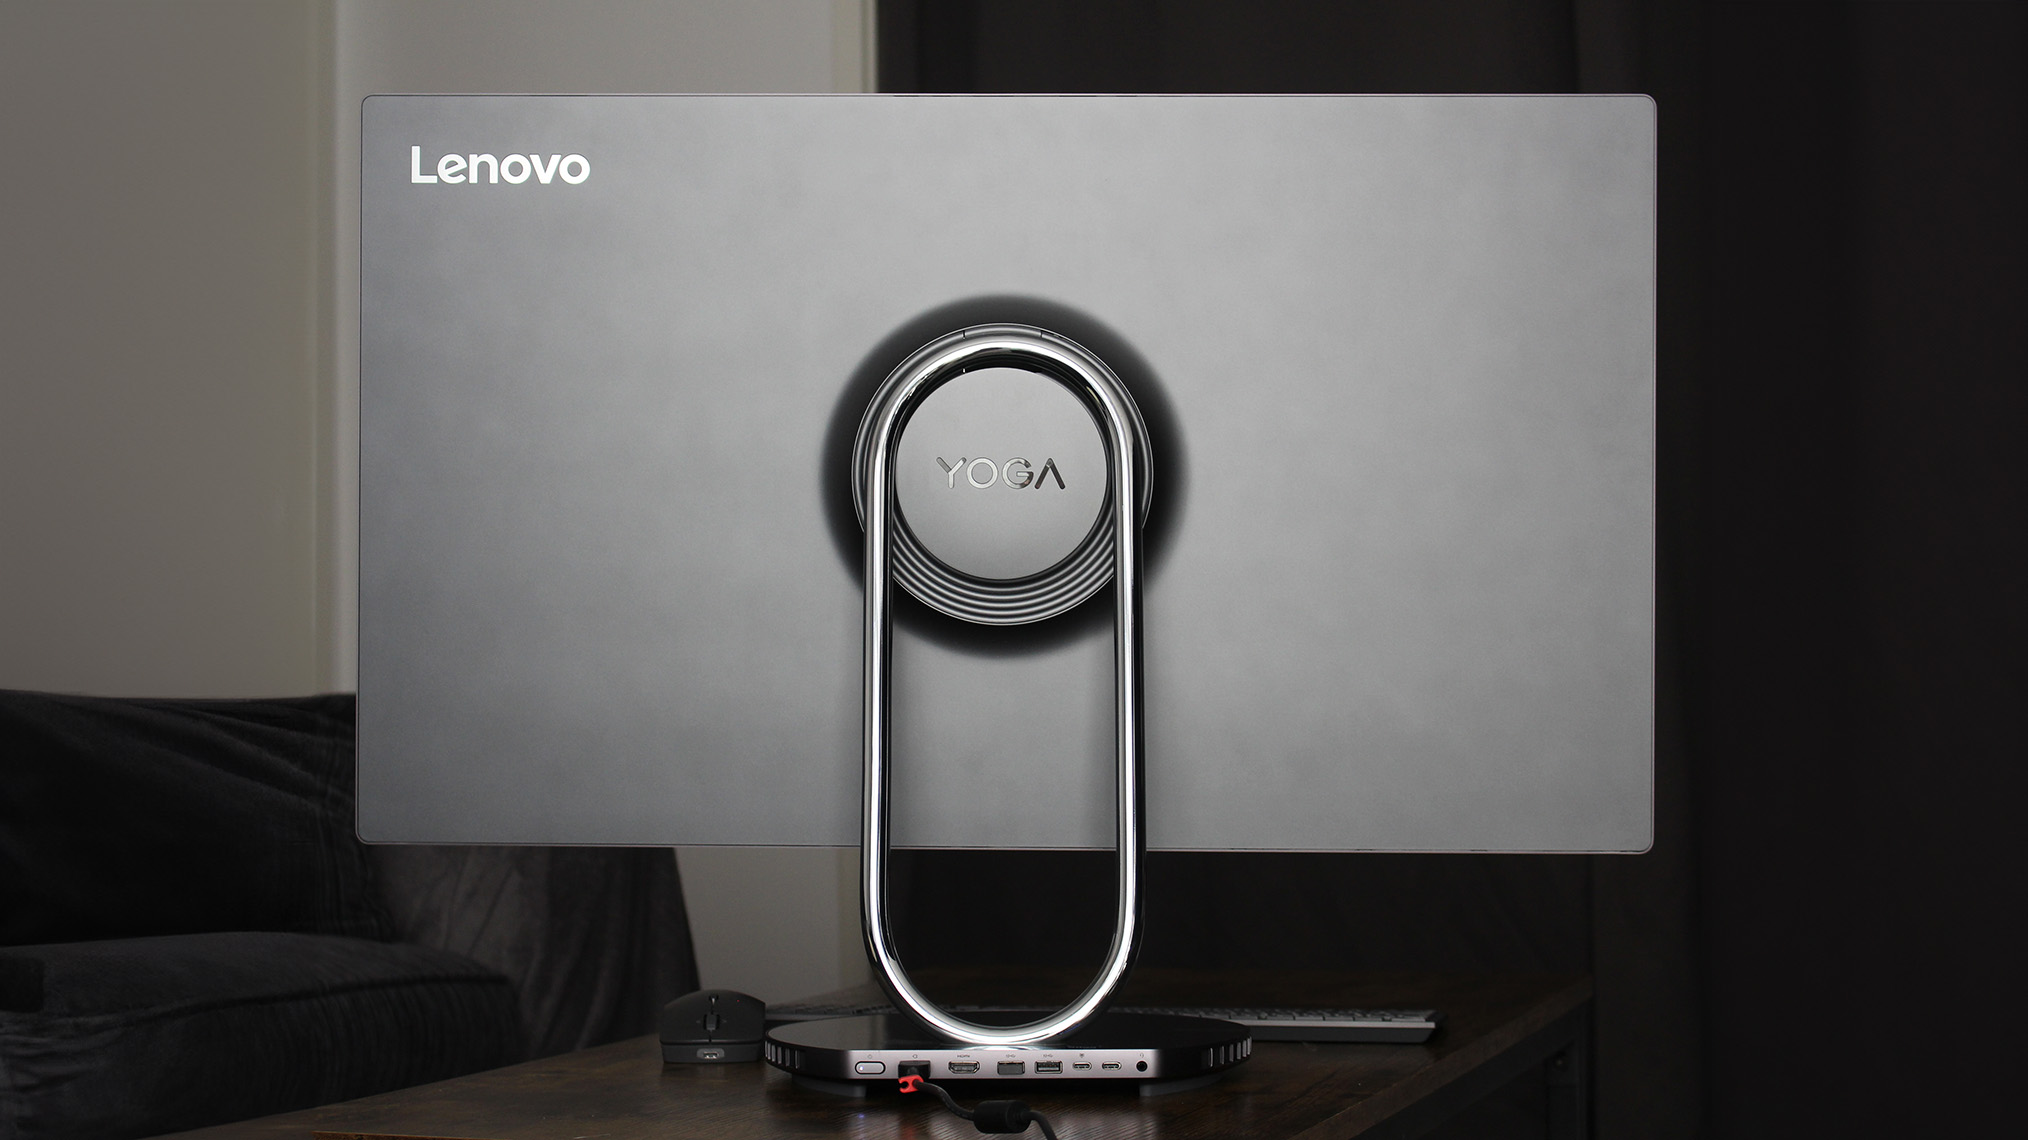 Lenovo Yoga AiO 9i review: An excellent iMac alternative with impressive 4K display